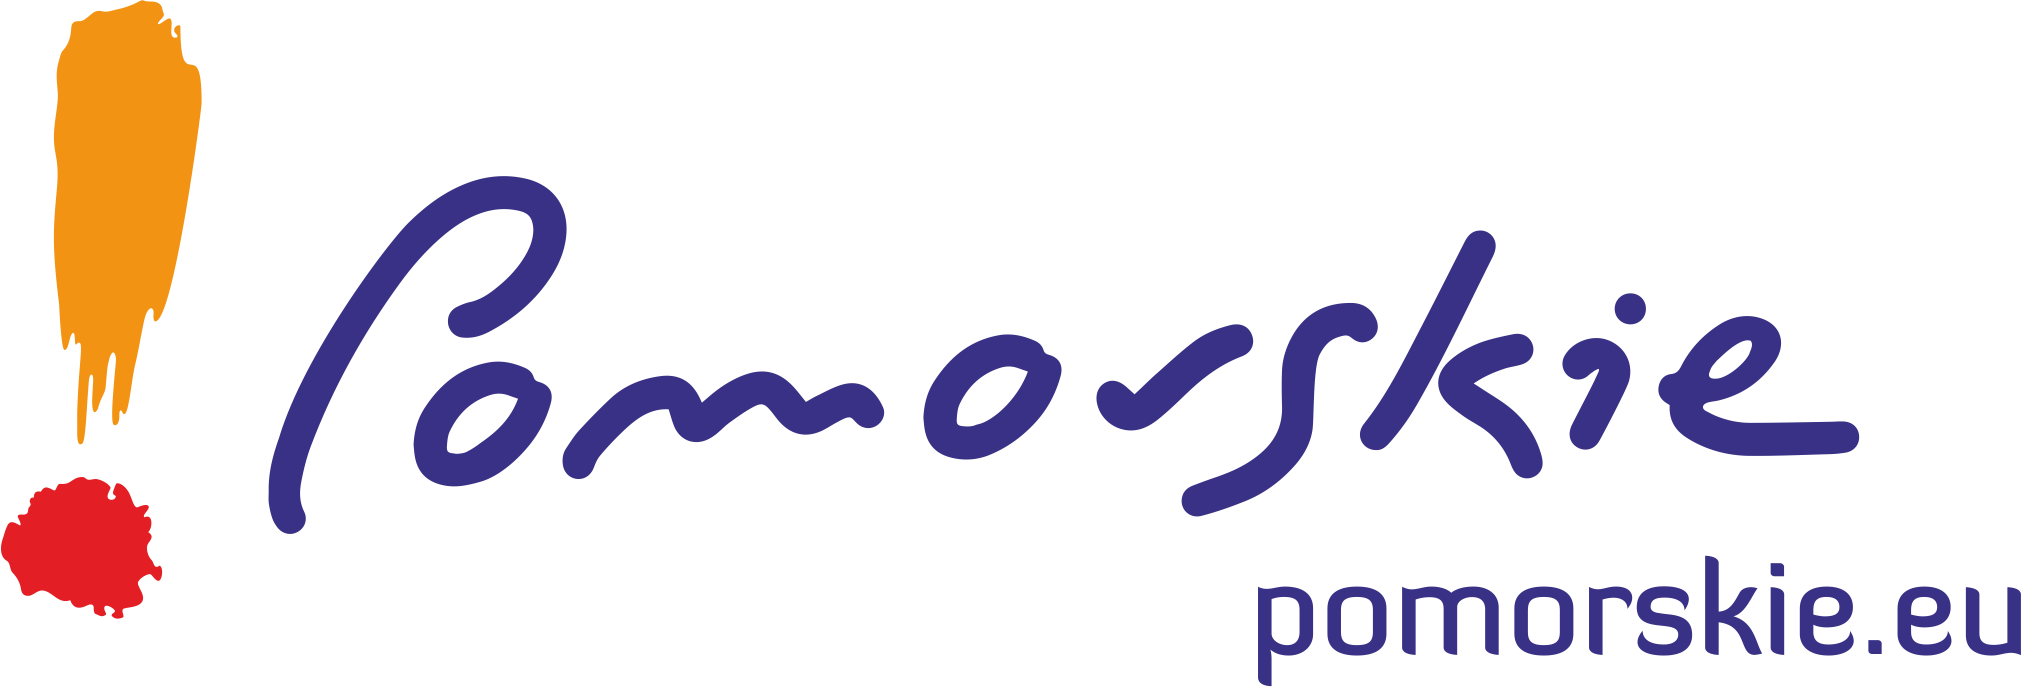 pomorskie eu logo